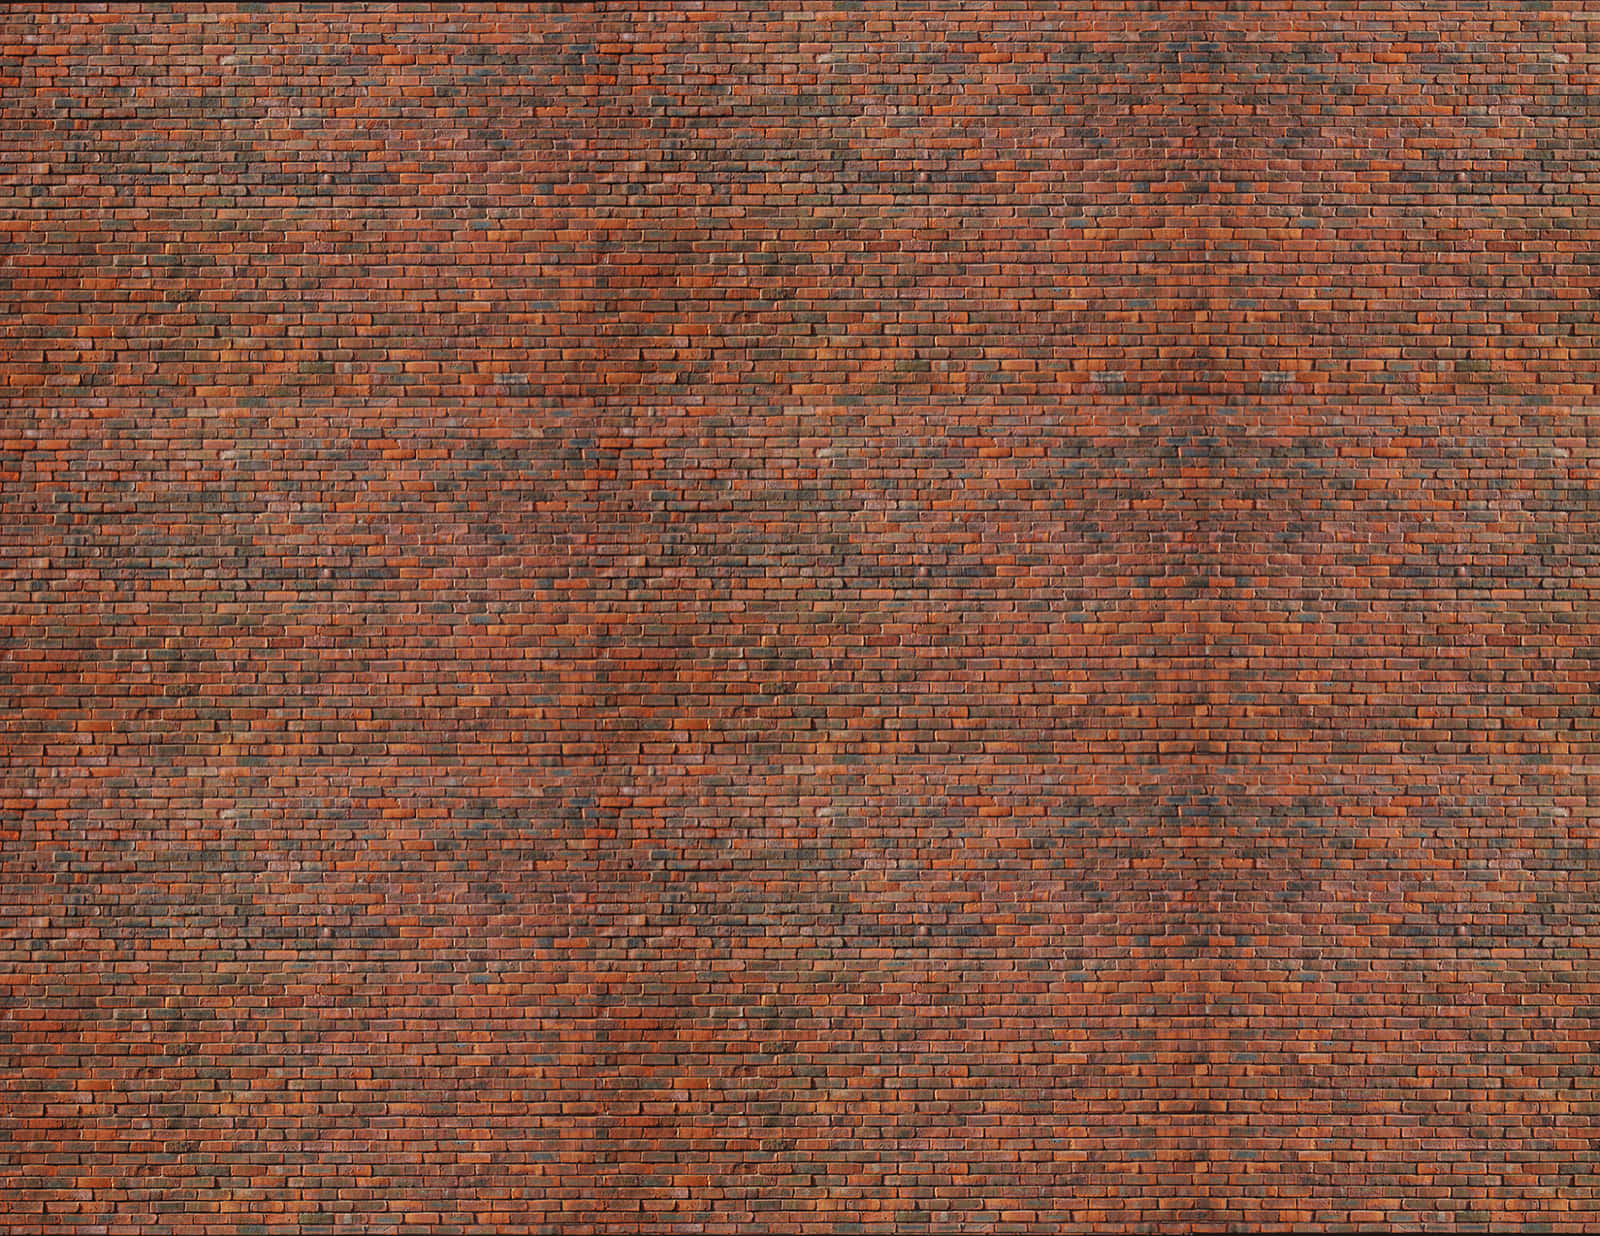 A Brick Wall With Red Bricks